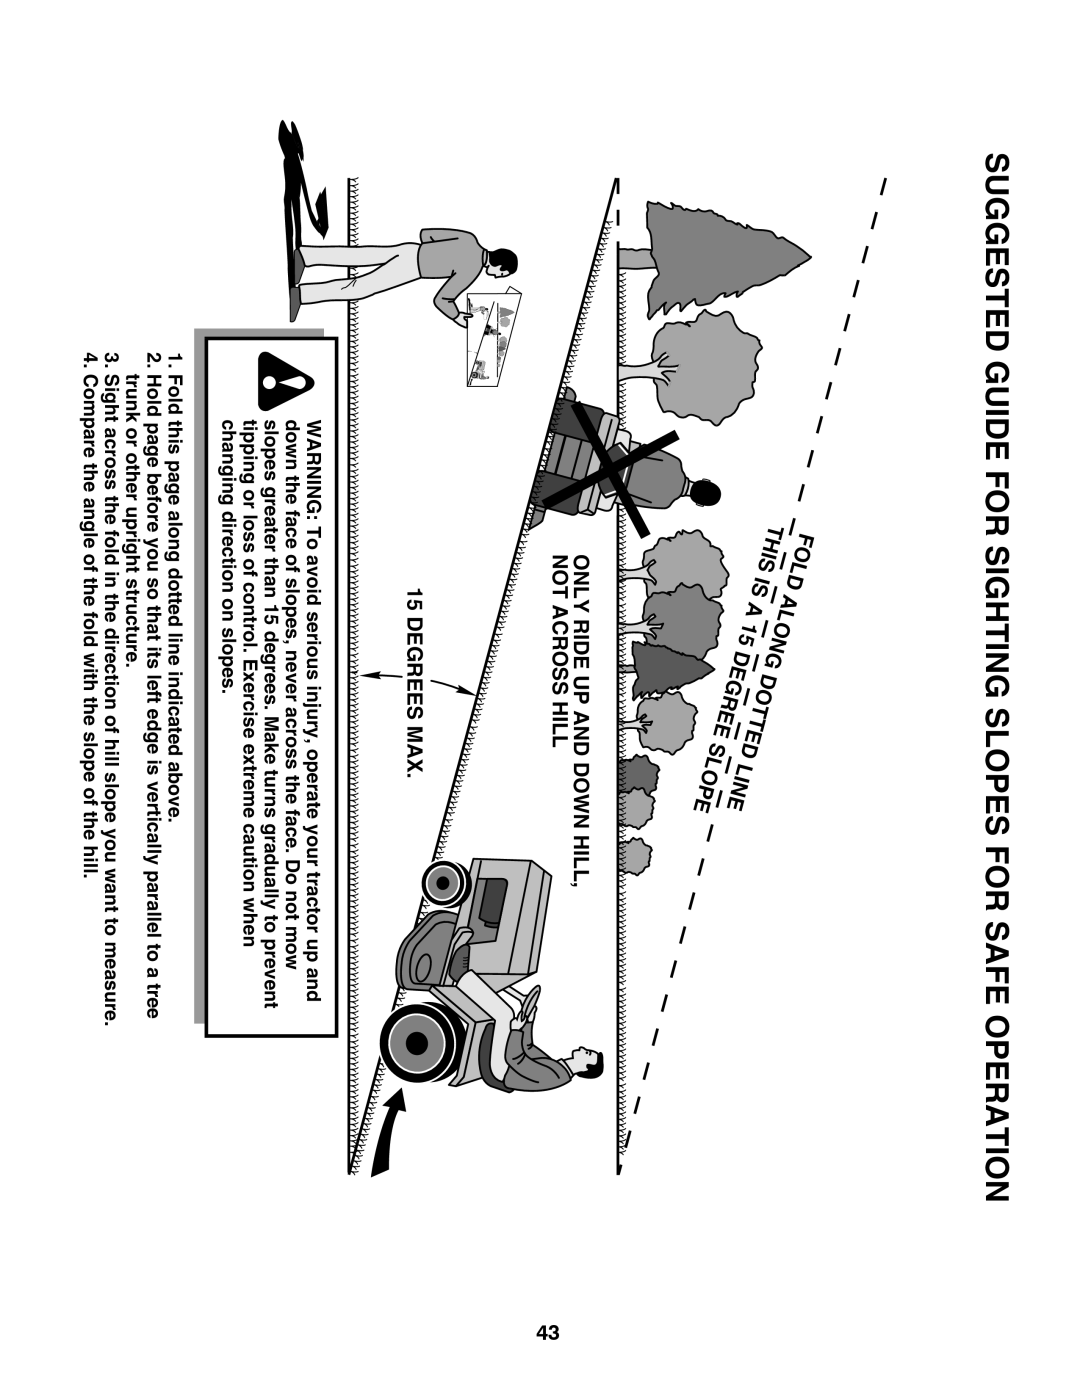 Husqvarna GTH27V48LS owner manual Suggested Guide For Sighting Slopes For Safe Operation 